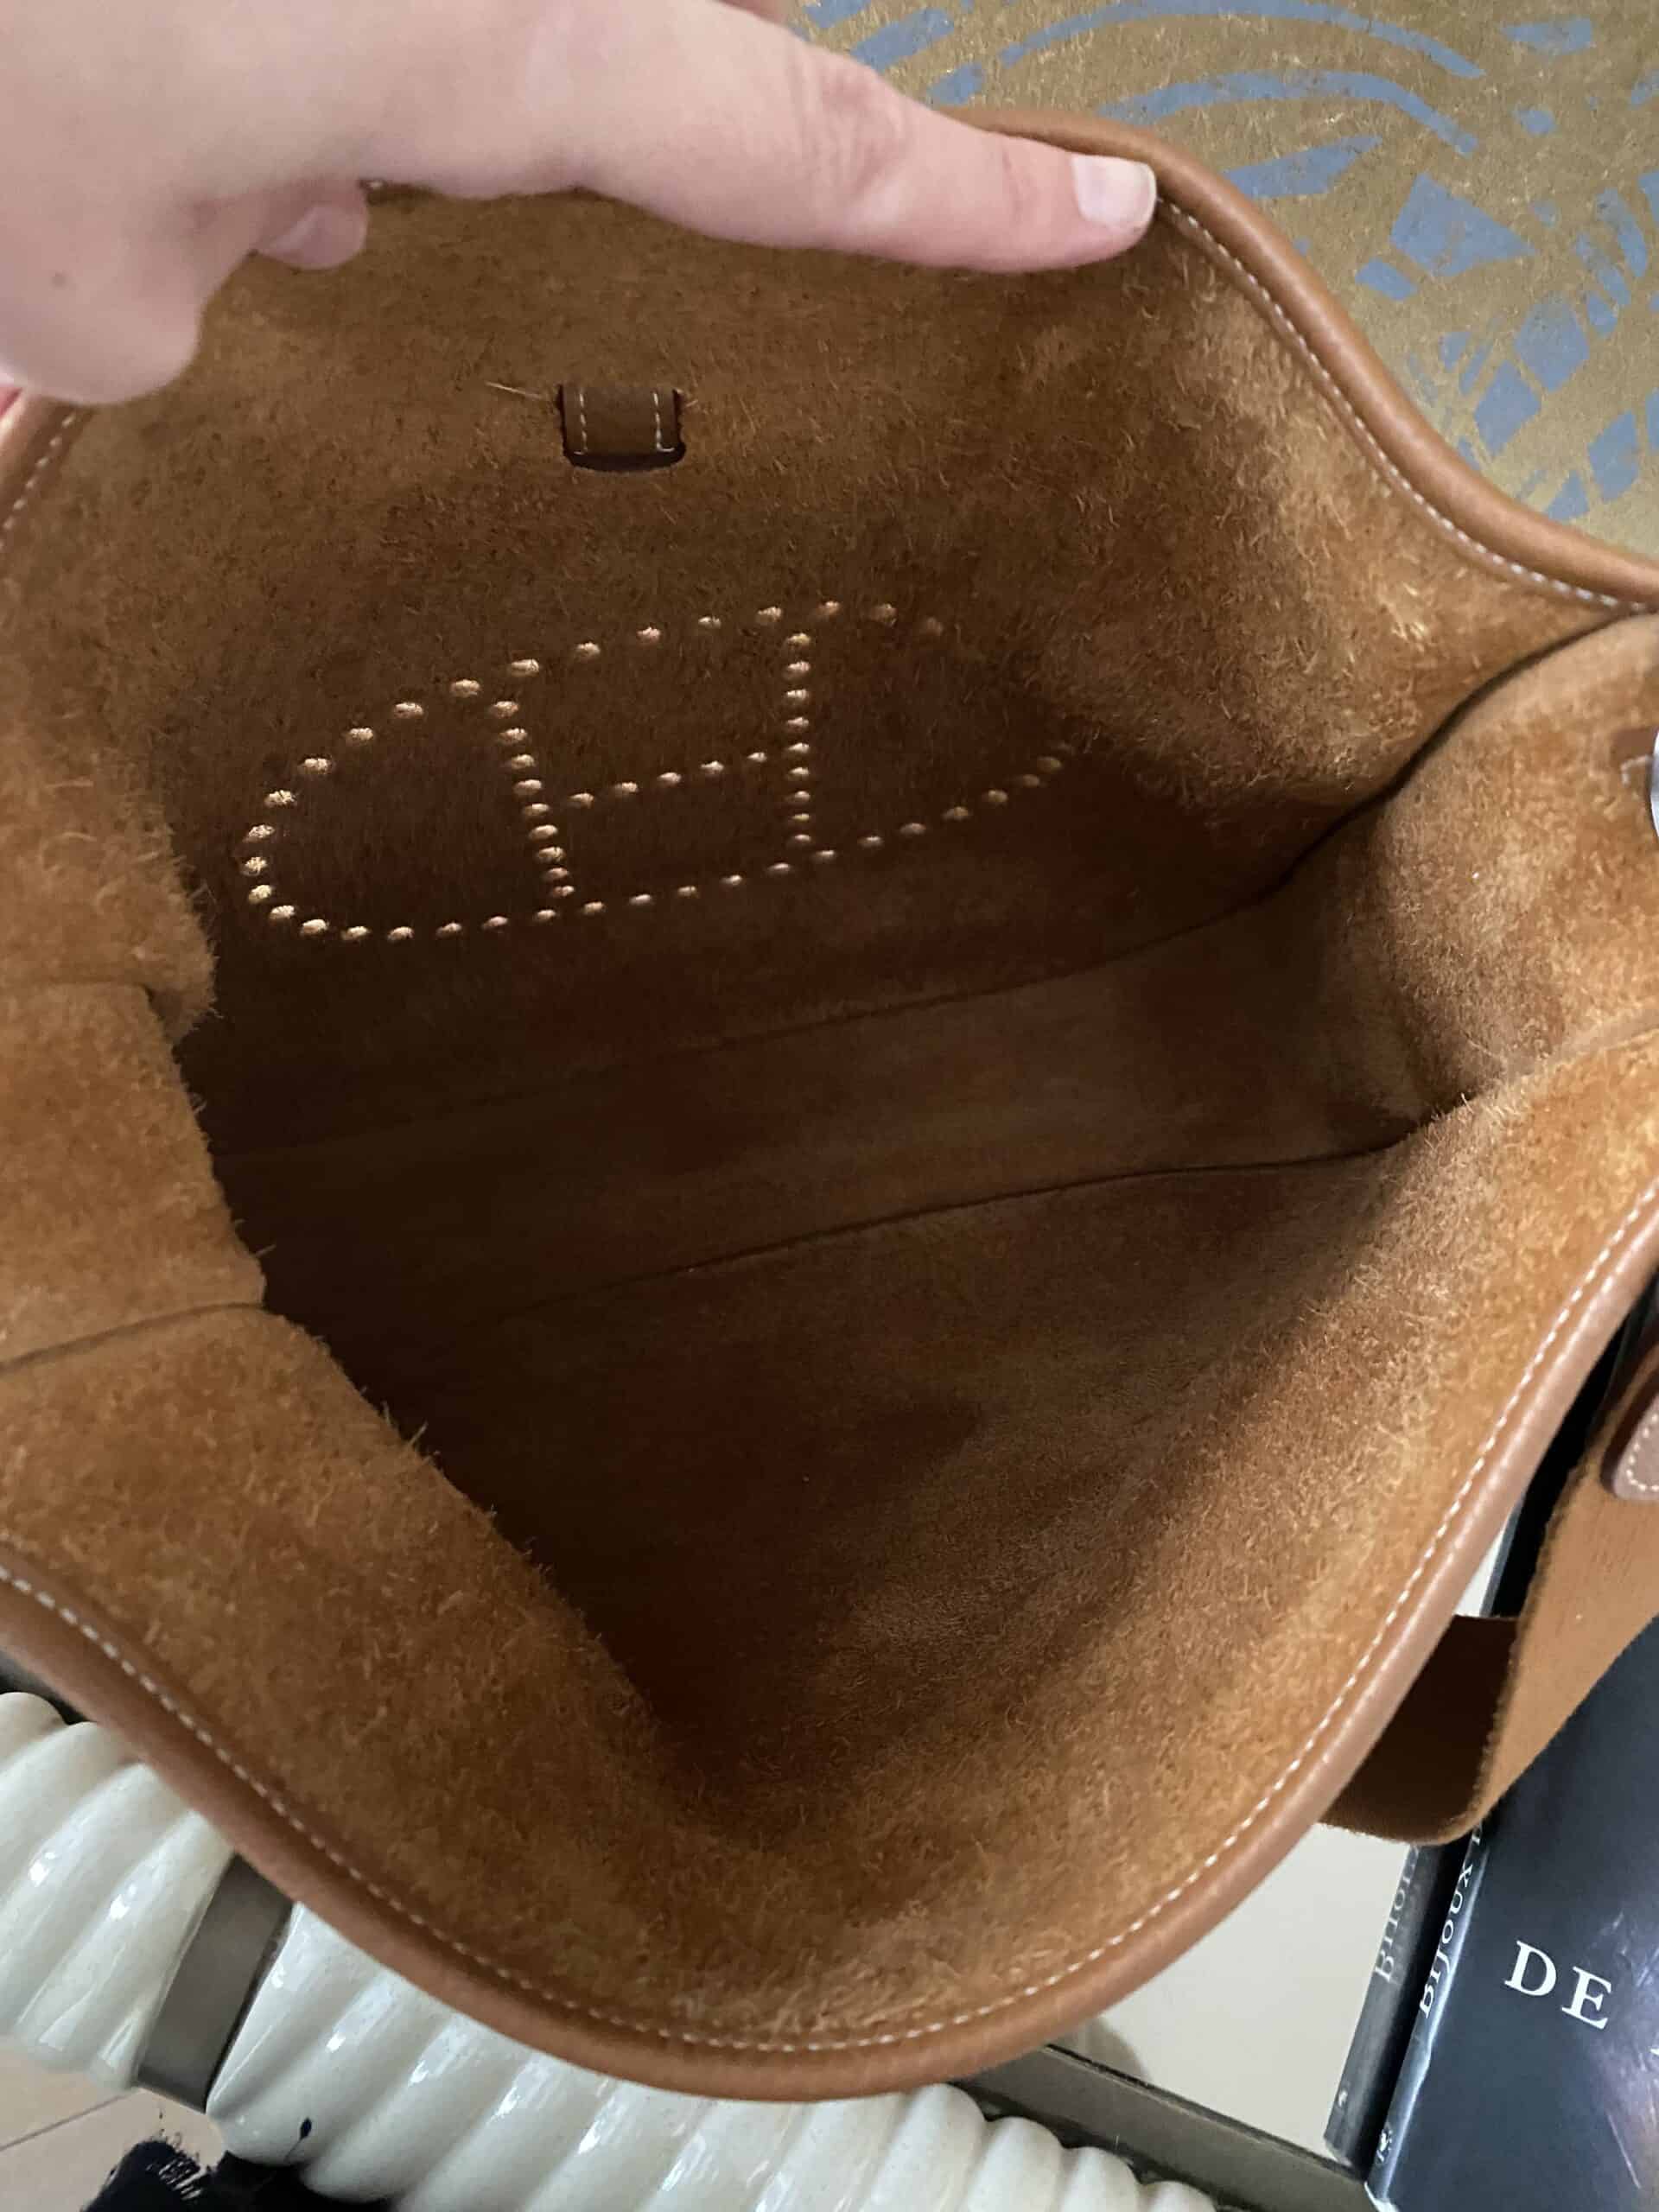 Reserved – Hermès Evelyne GM natural leather c.2018 | Katheley's